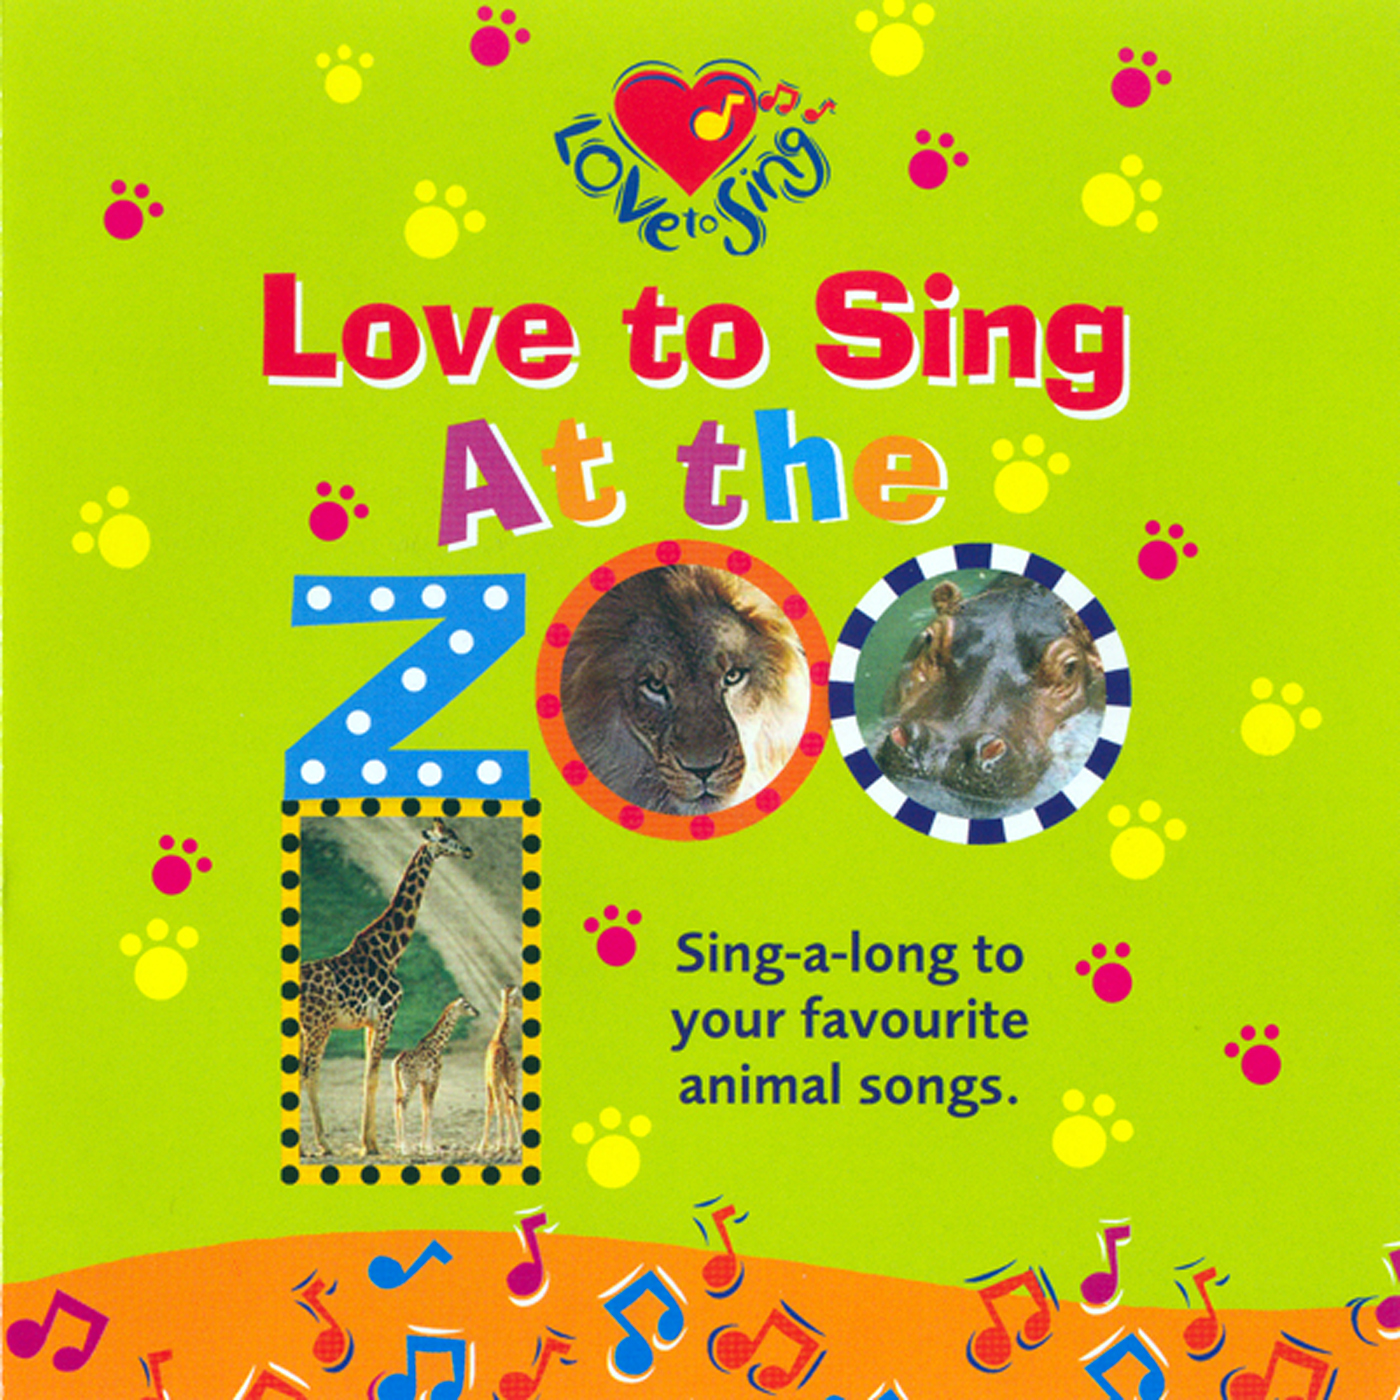 At the Zoo Songs Download Album | Kids Animal Songs